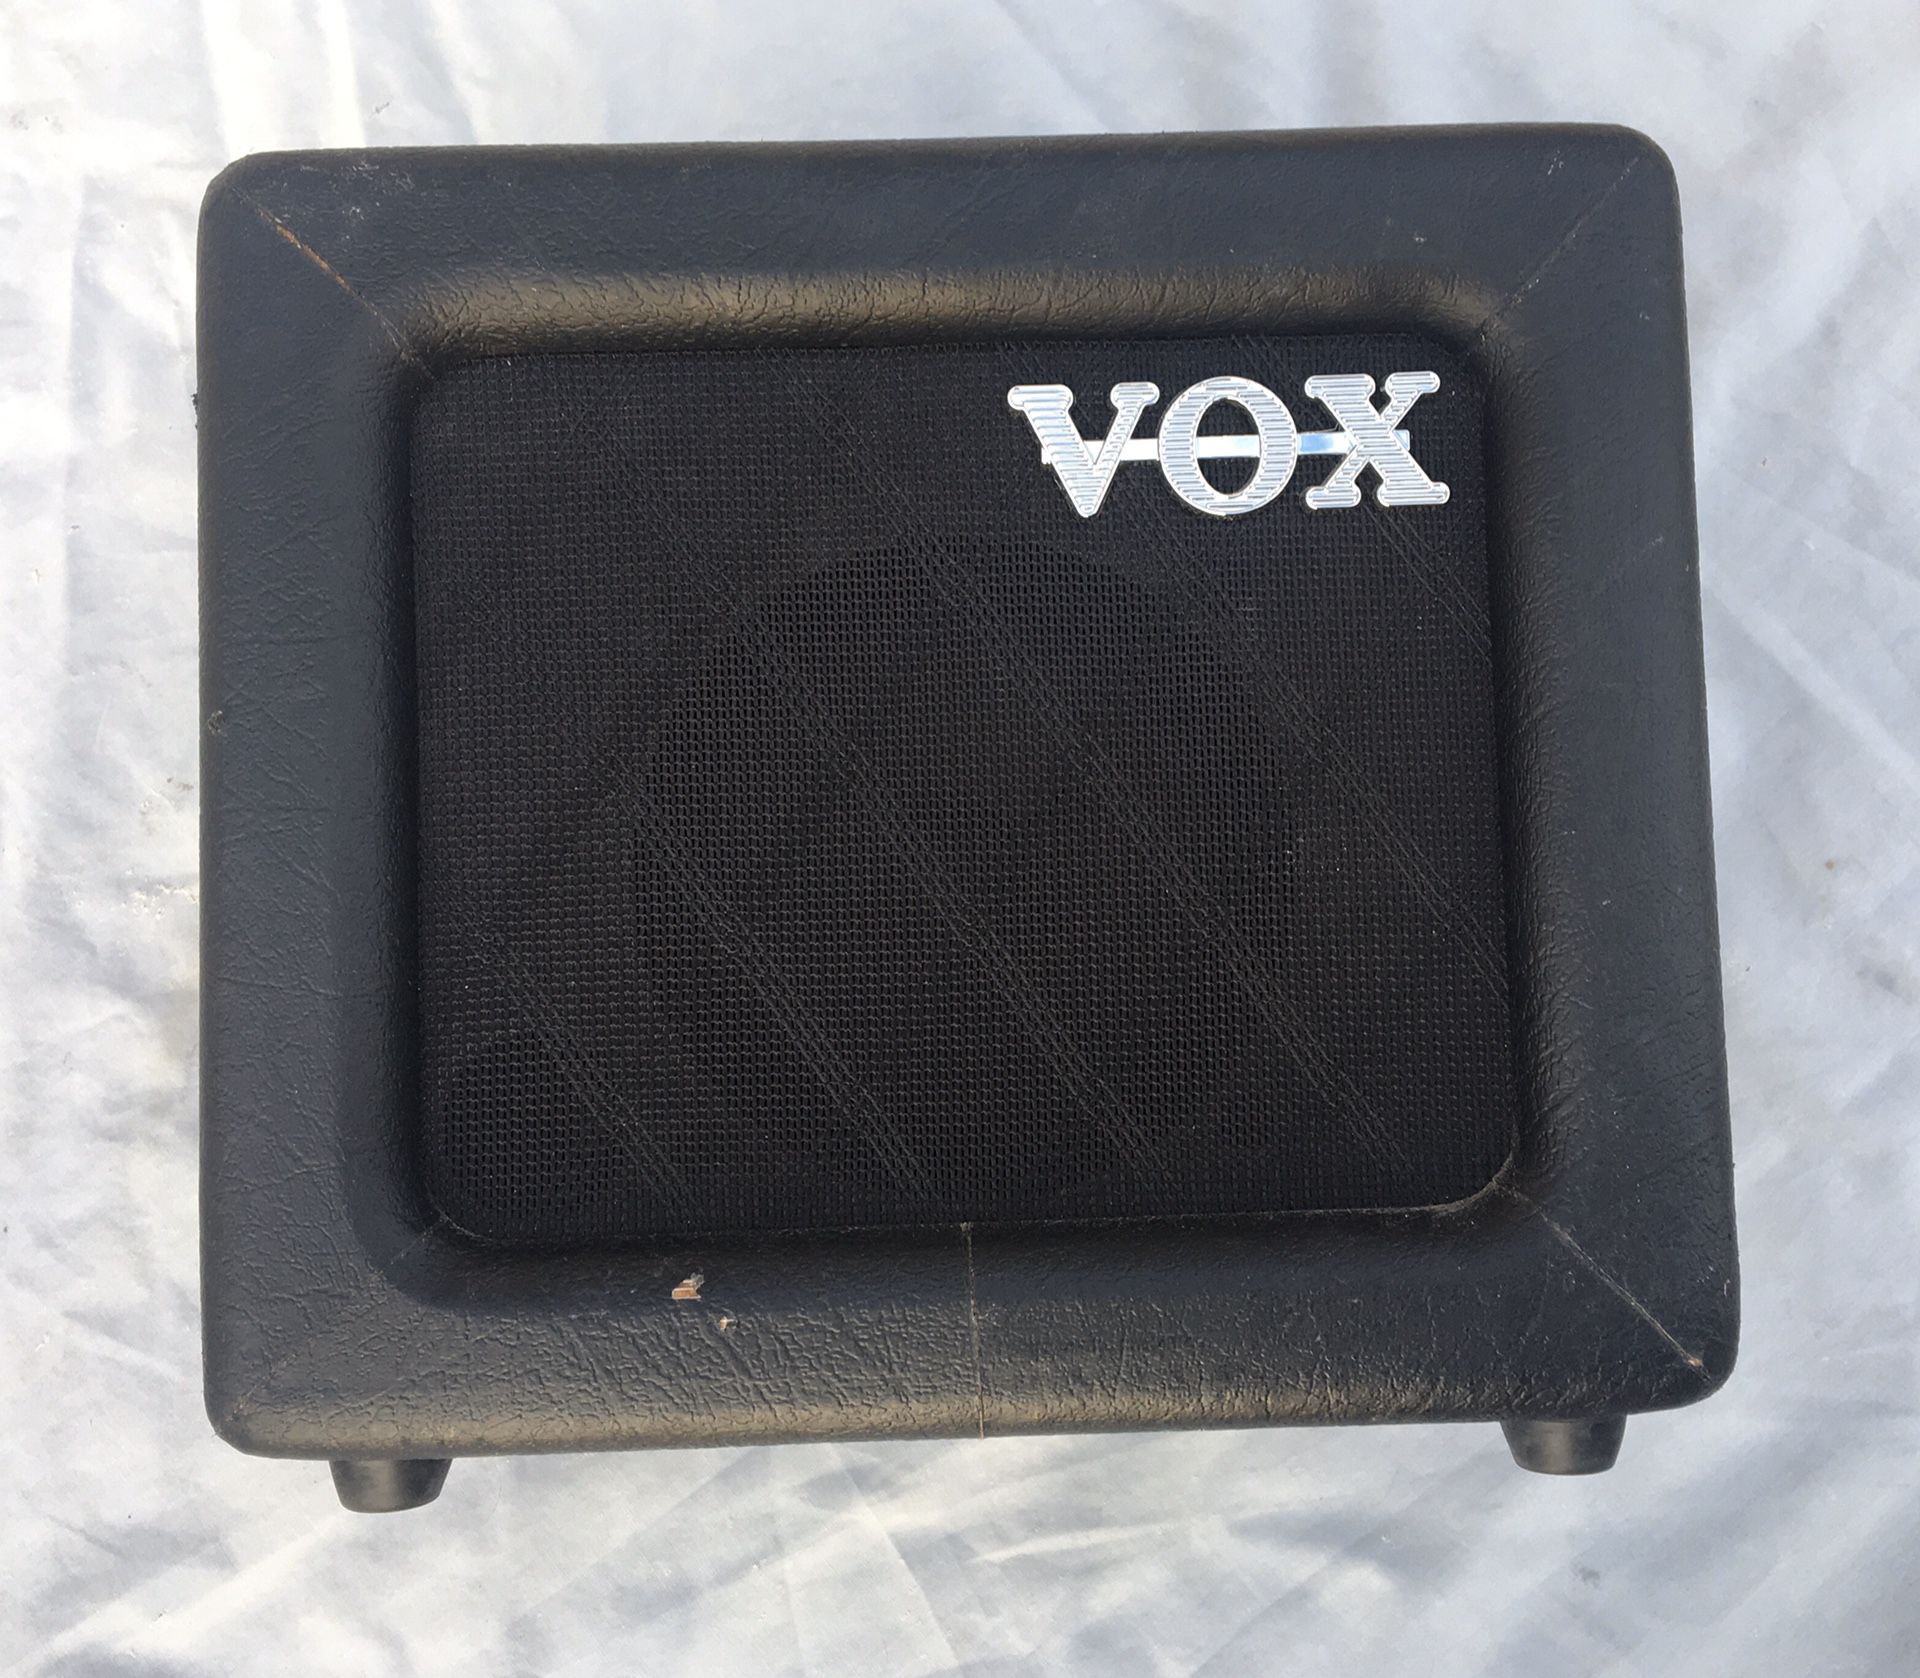 Vox Mini 3 G2 guitar amplifier